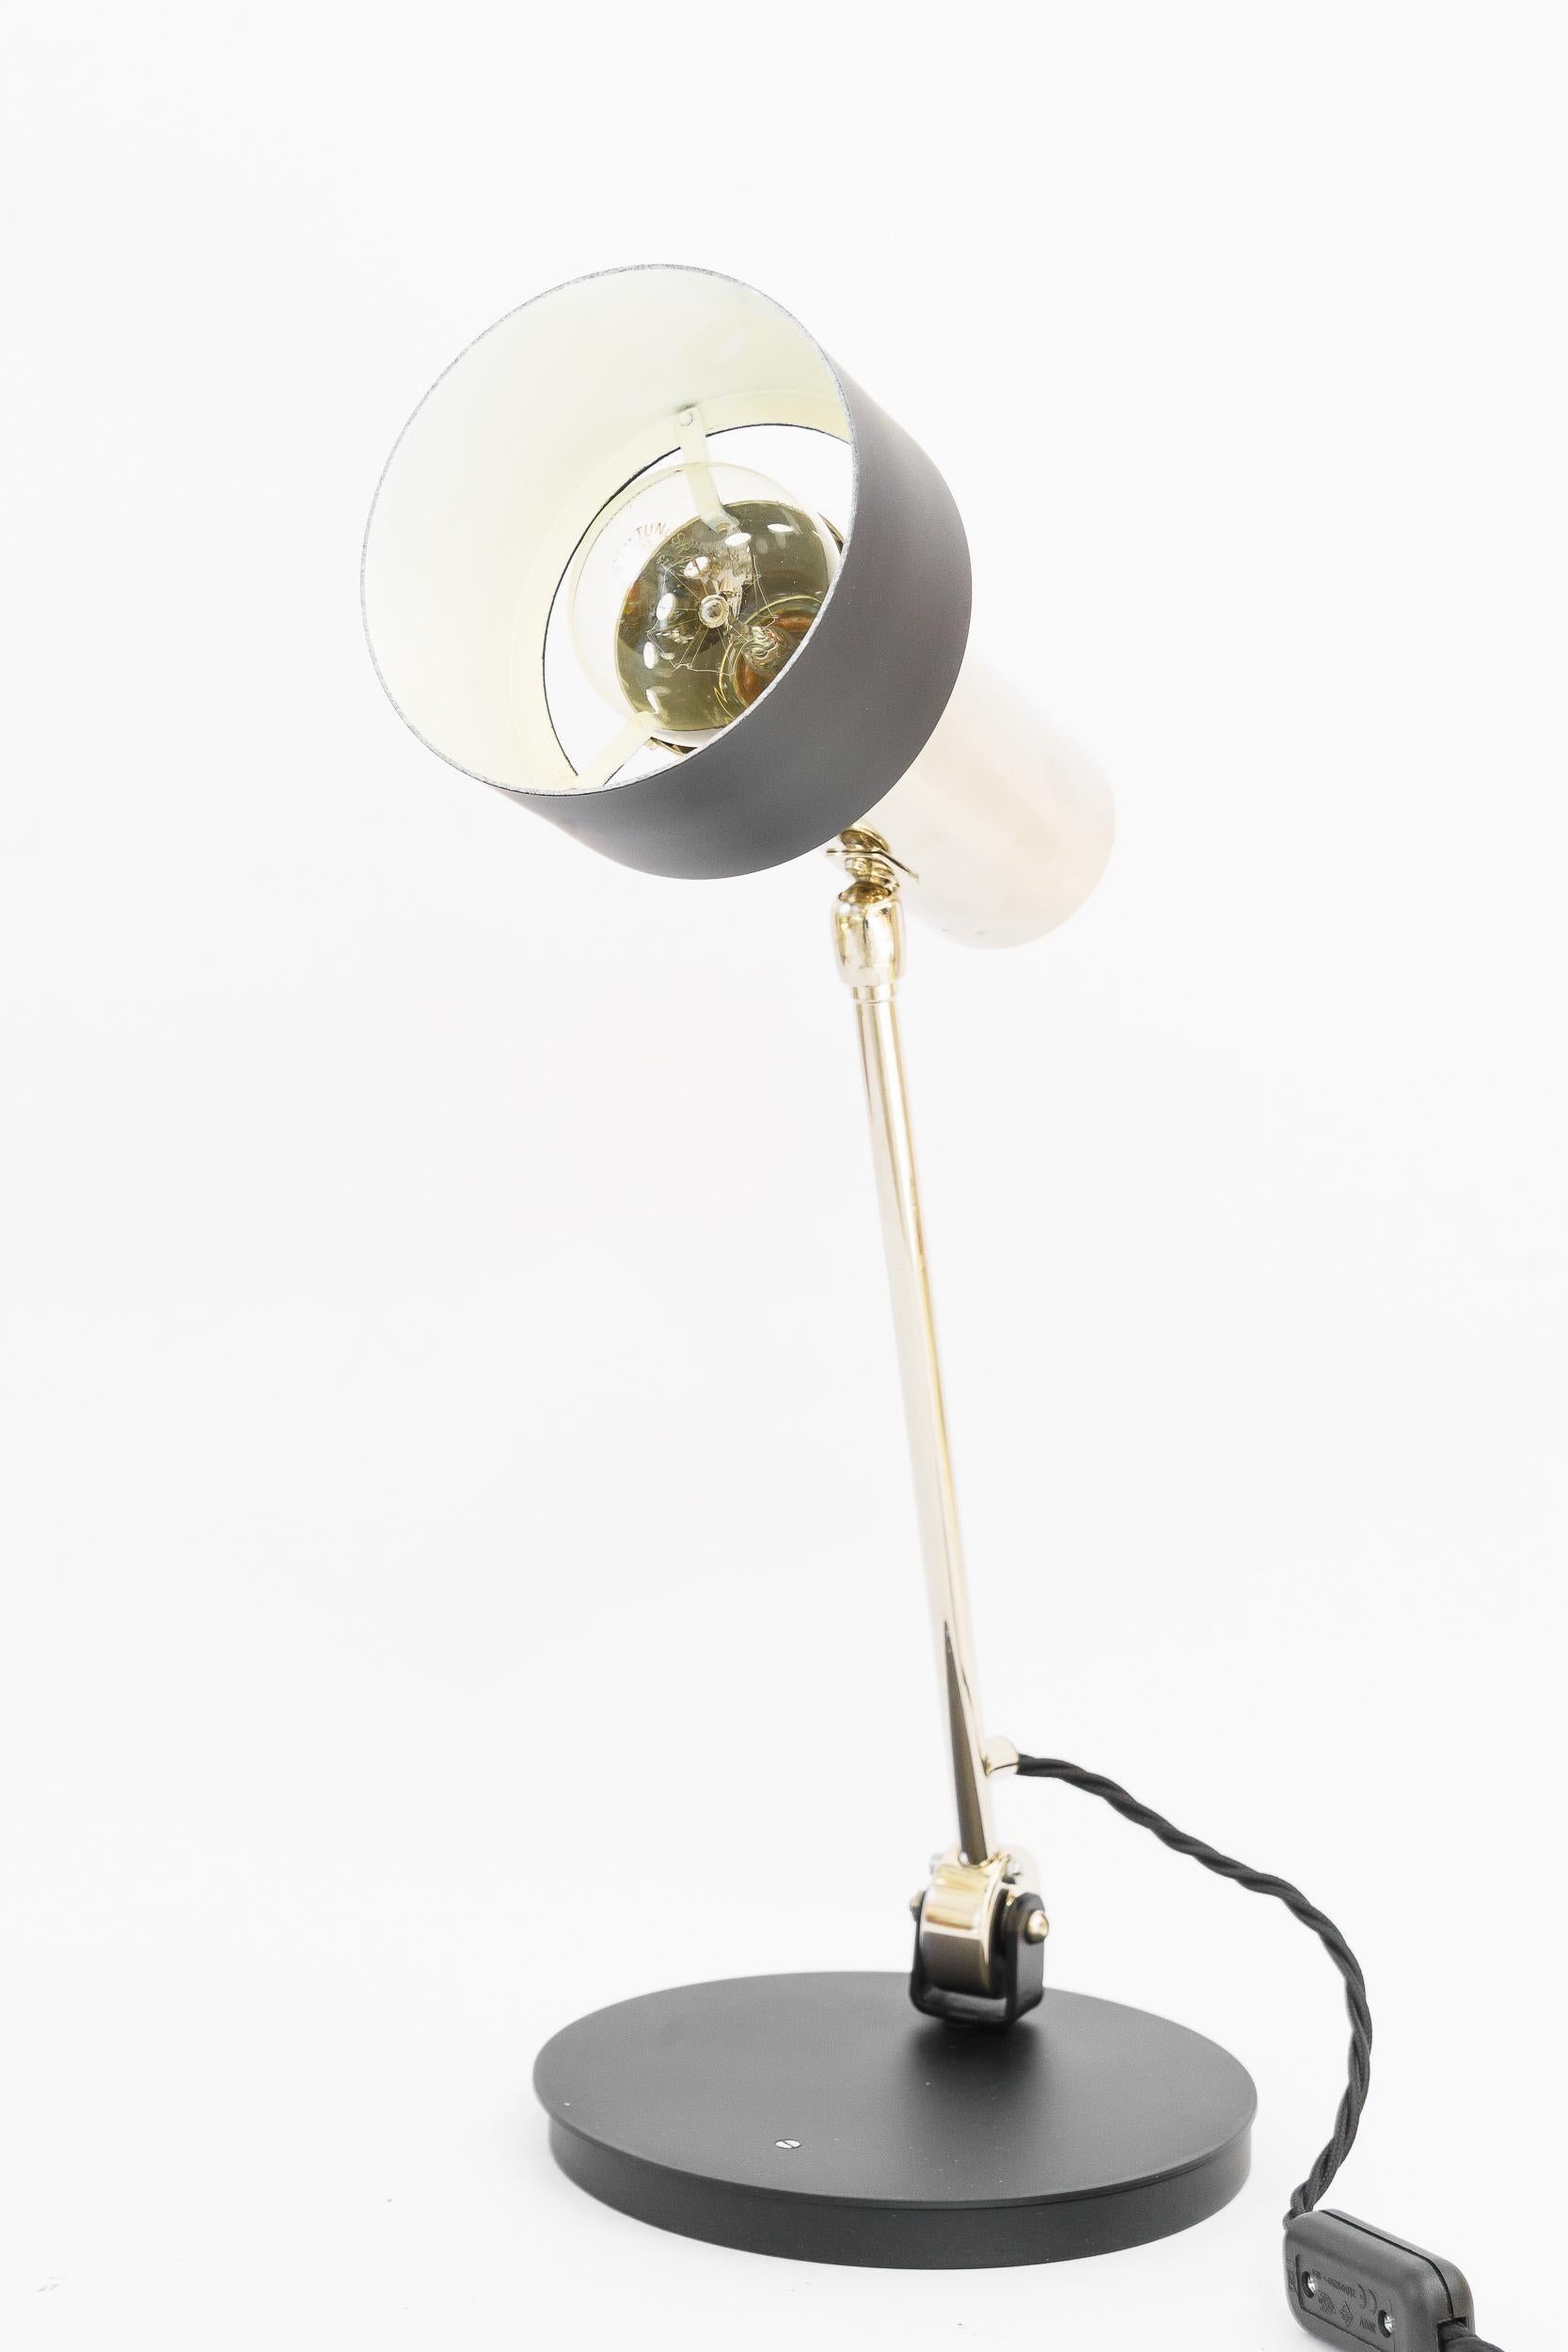 Nickel-plated Table lamp vienna around 1960s
Original condition